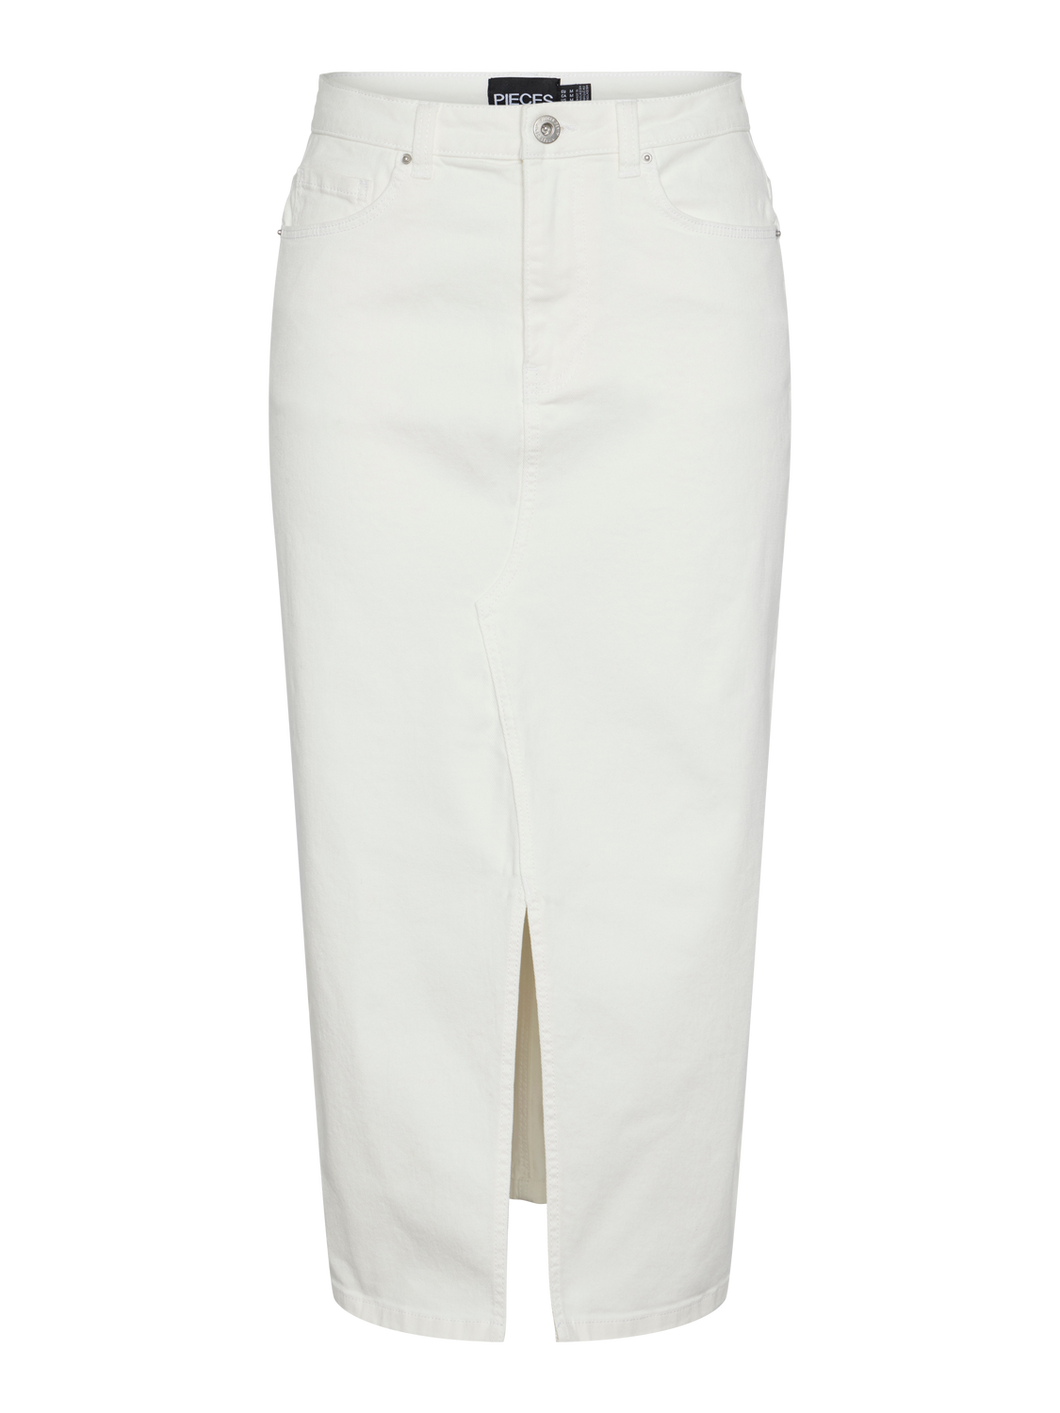 PCJESSIE Skirt - Bright White